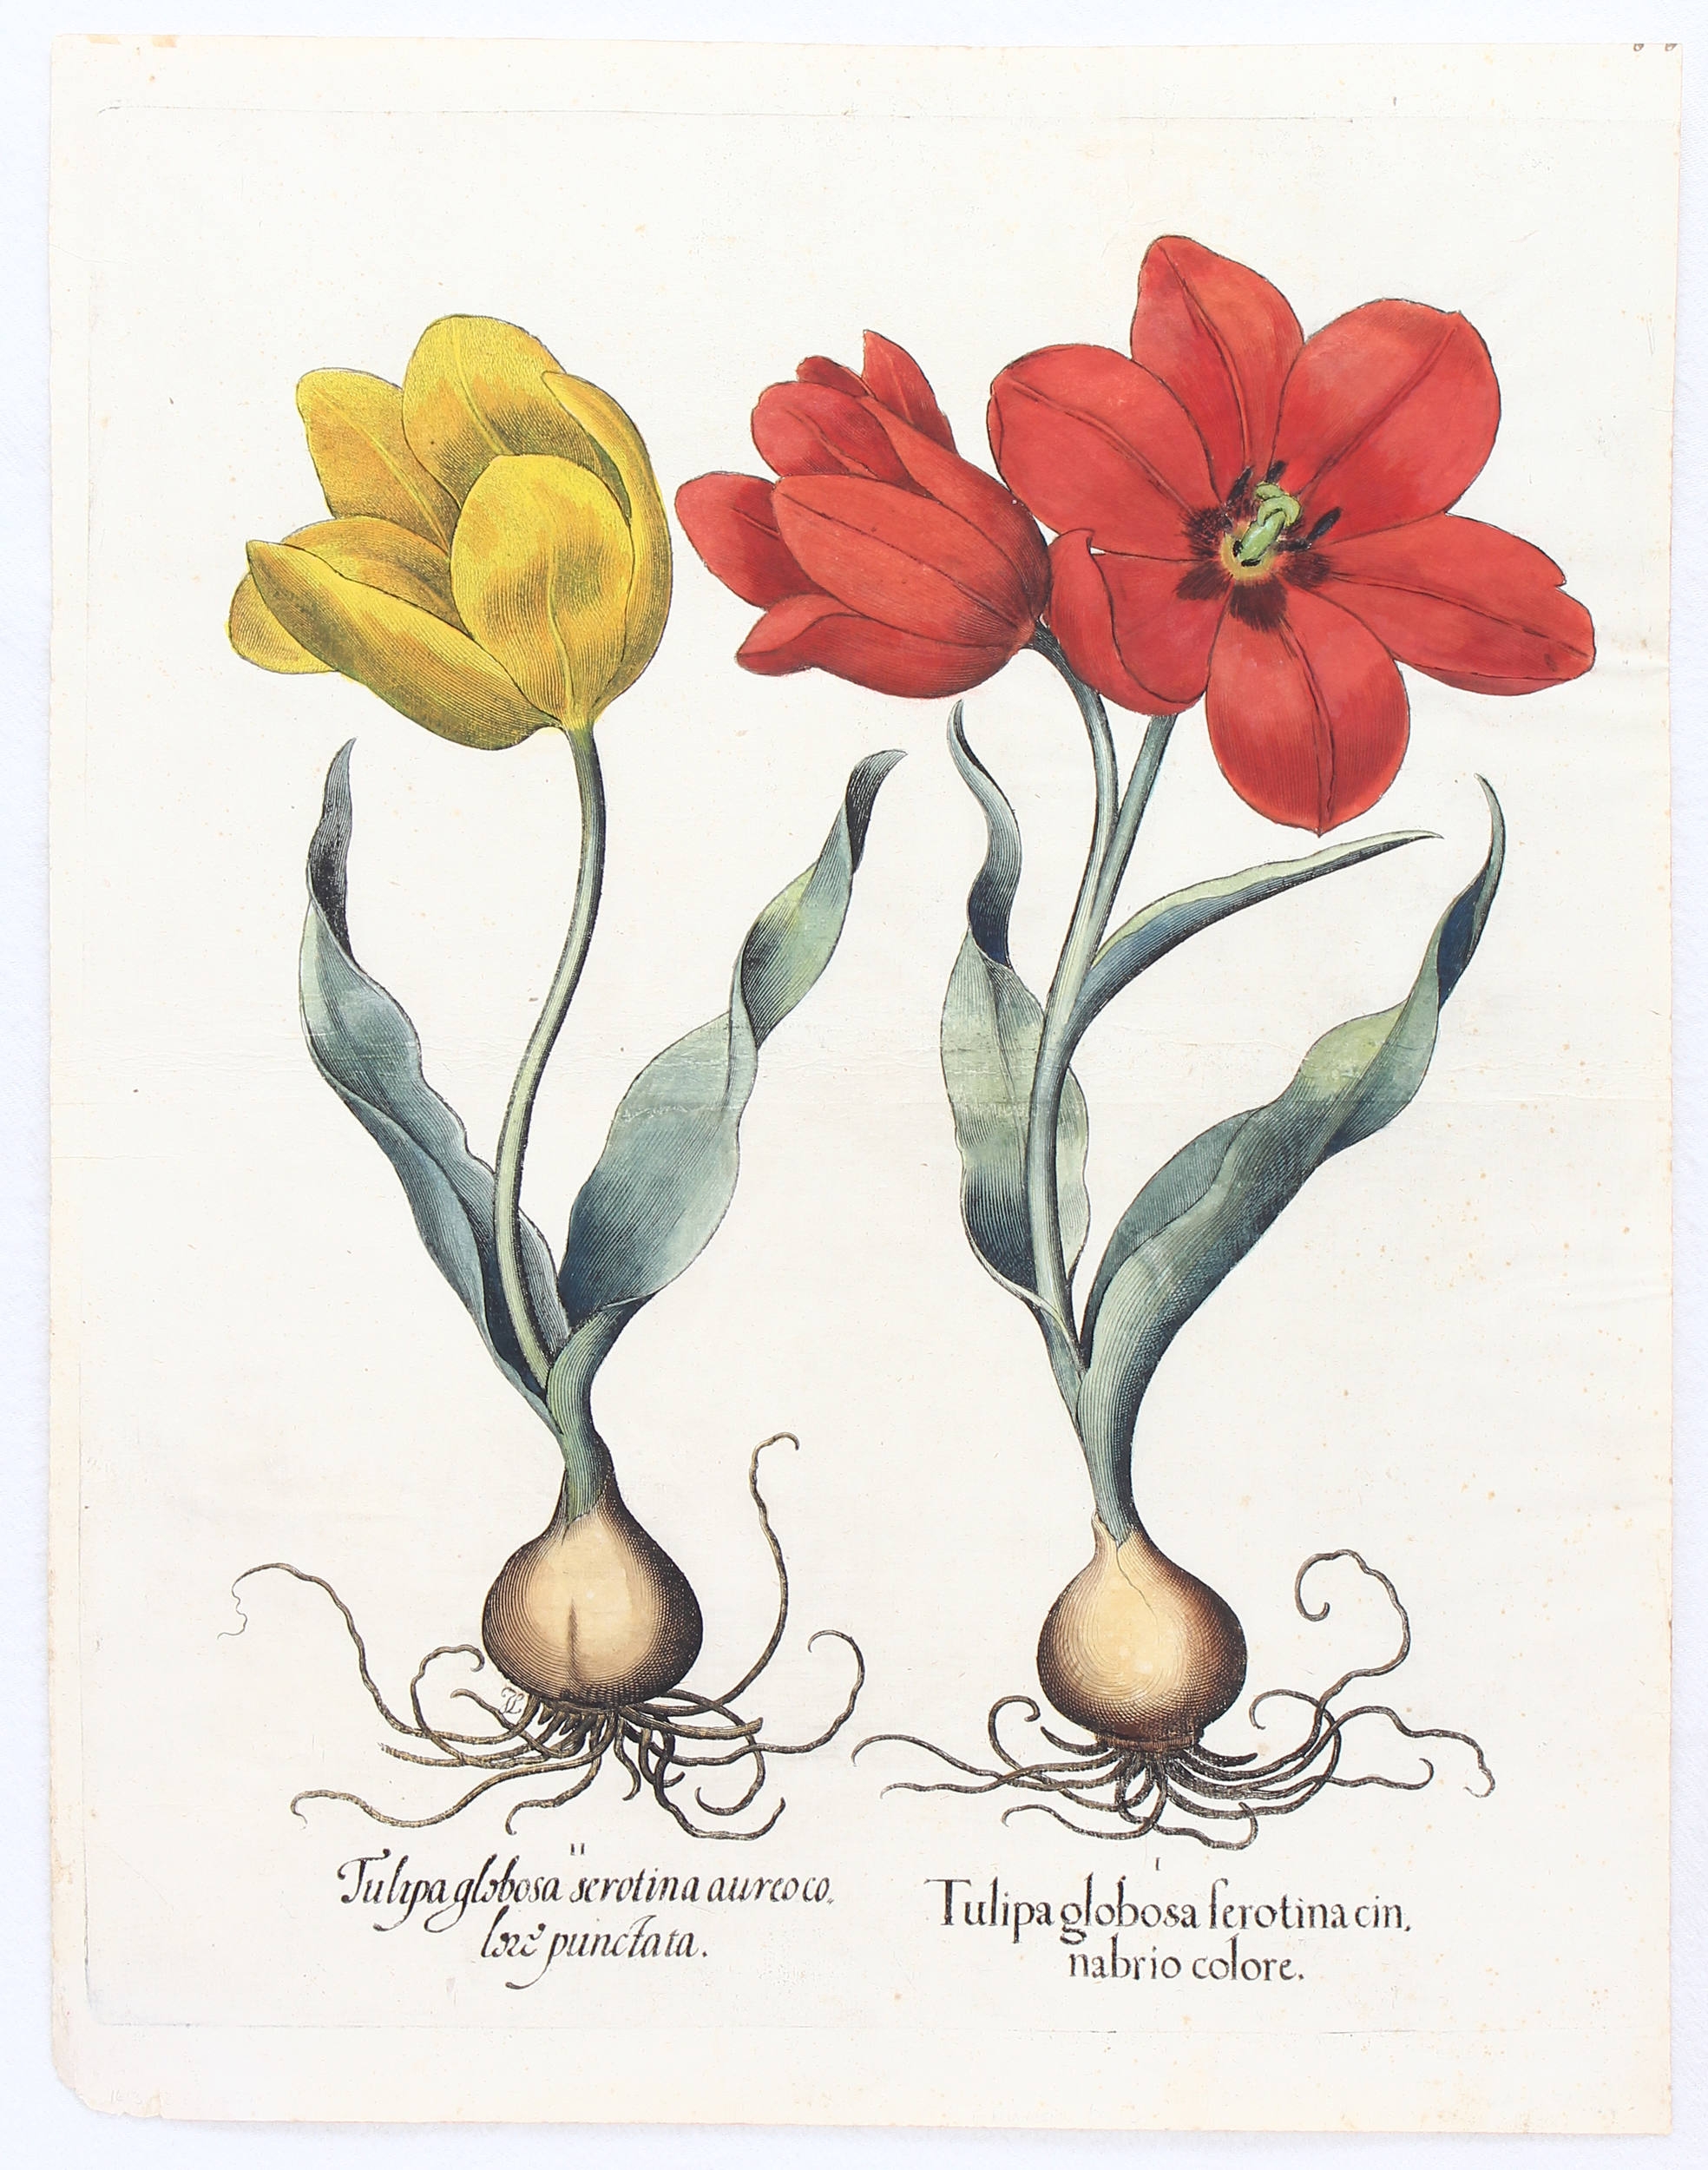 Tulipa globosa serotina cinnabrio colore (&) aureo colore punctata (Späte u. getupfte Tulpe) by Basilius Besler